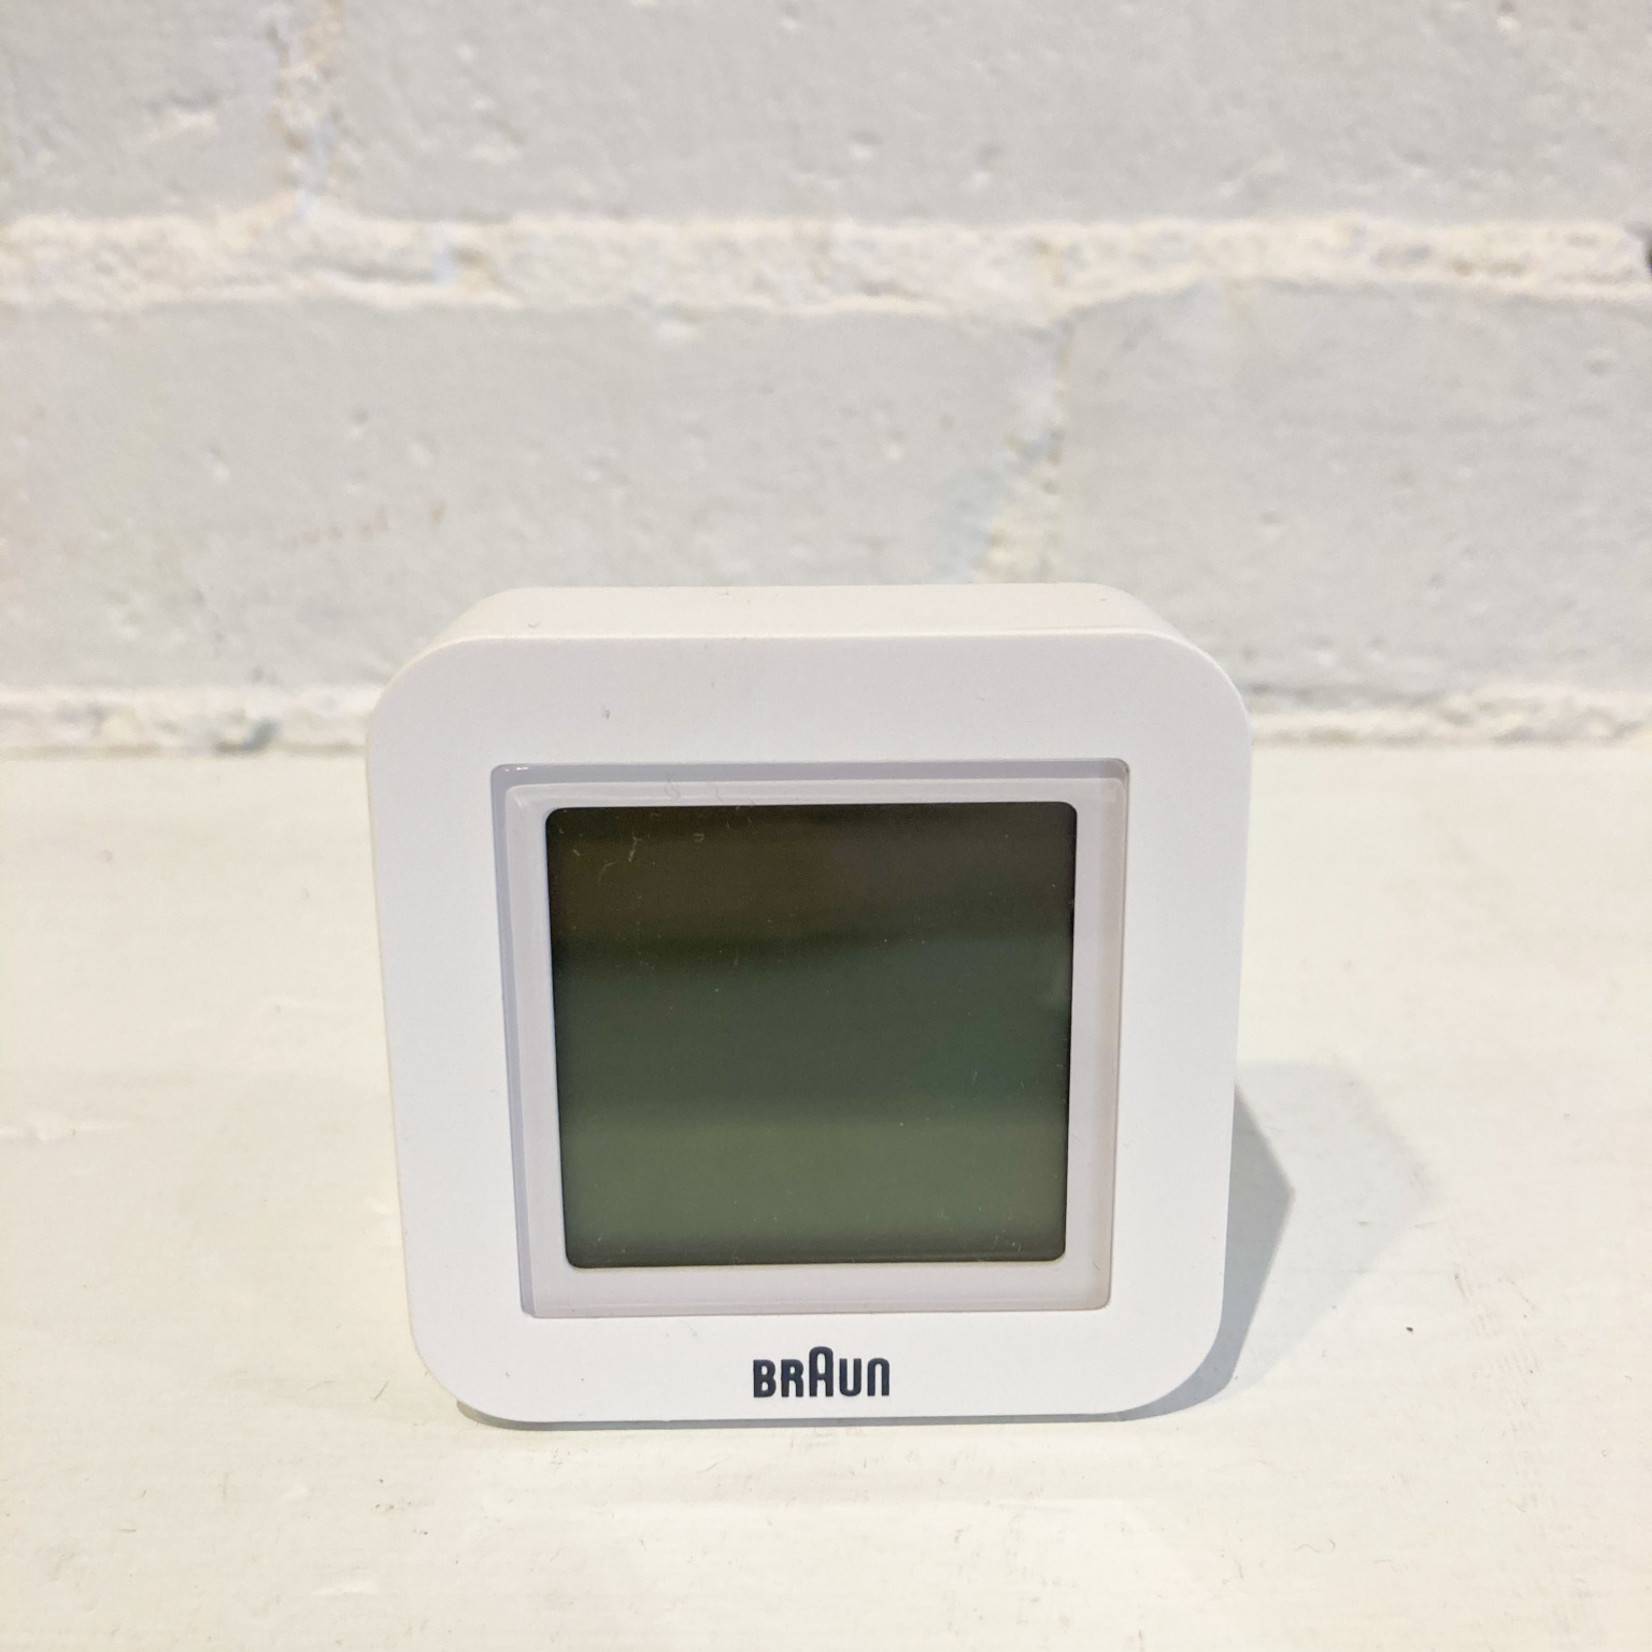 Braun Travel Alarm Clock: Digital White